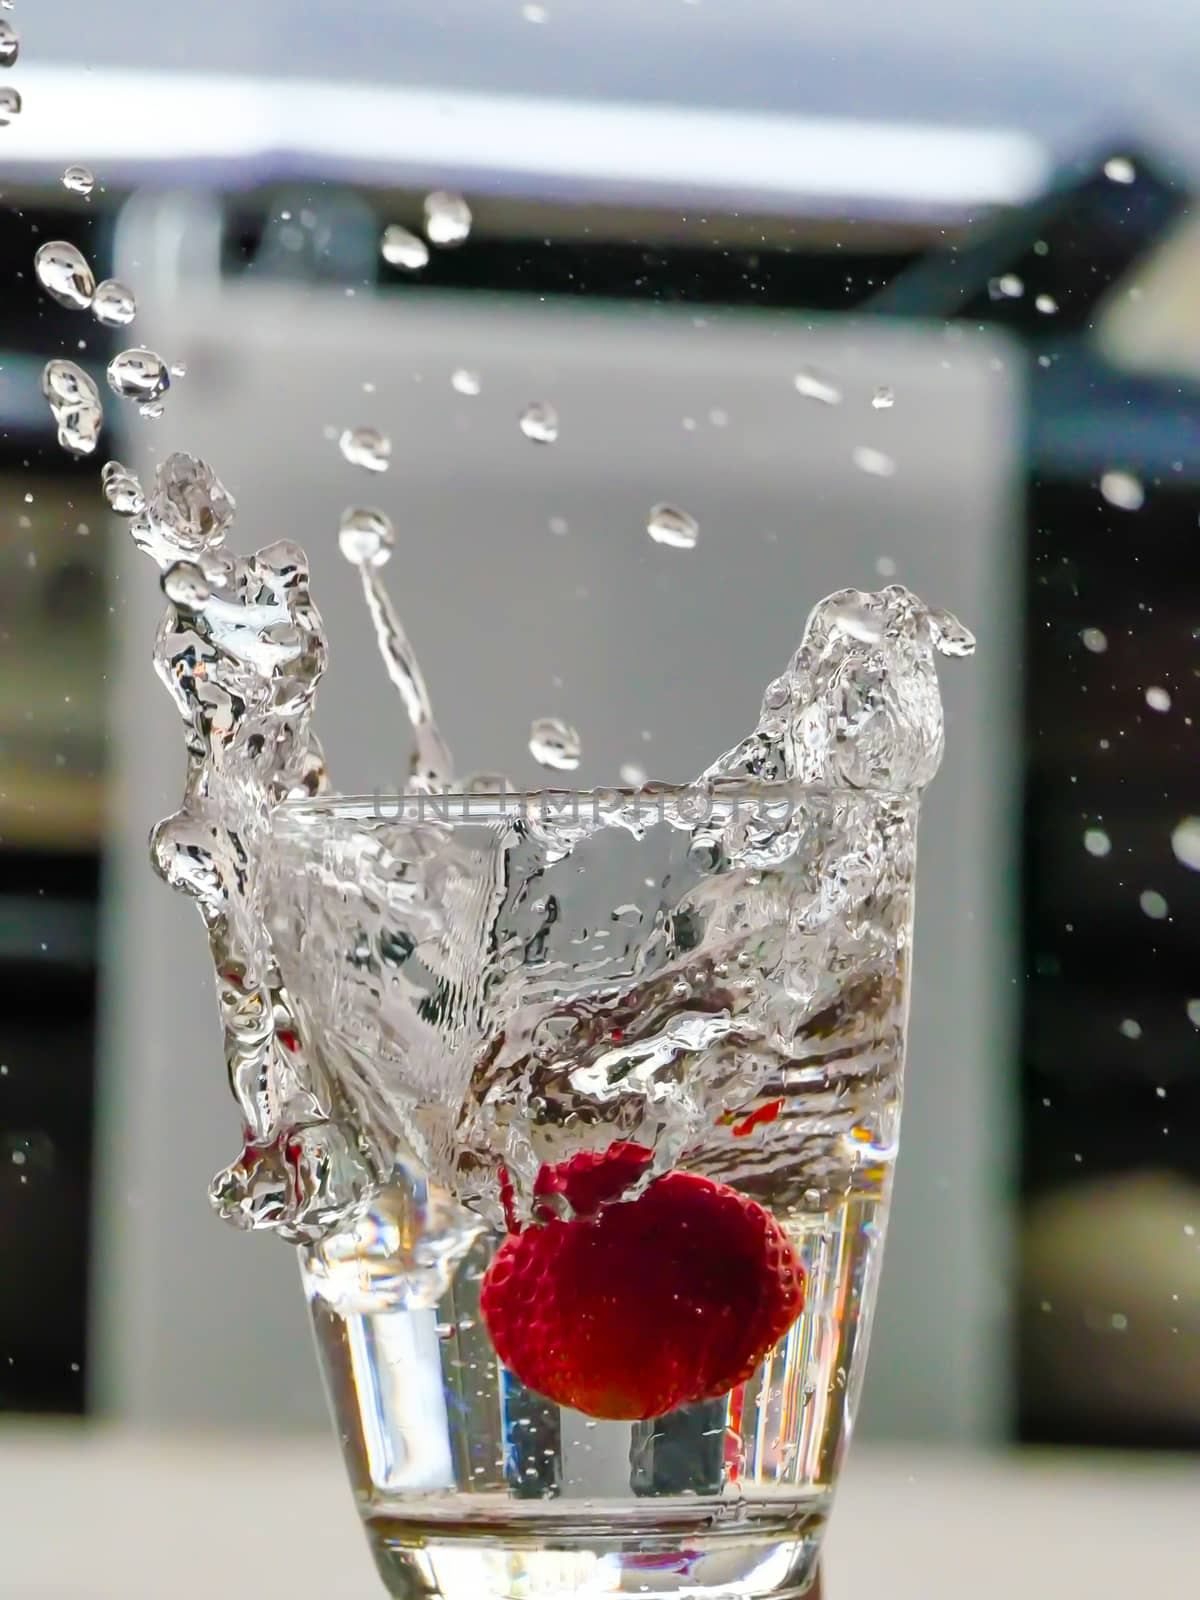 Strawberry Water splash in glass